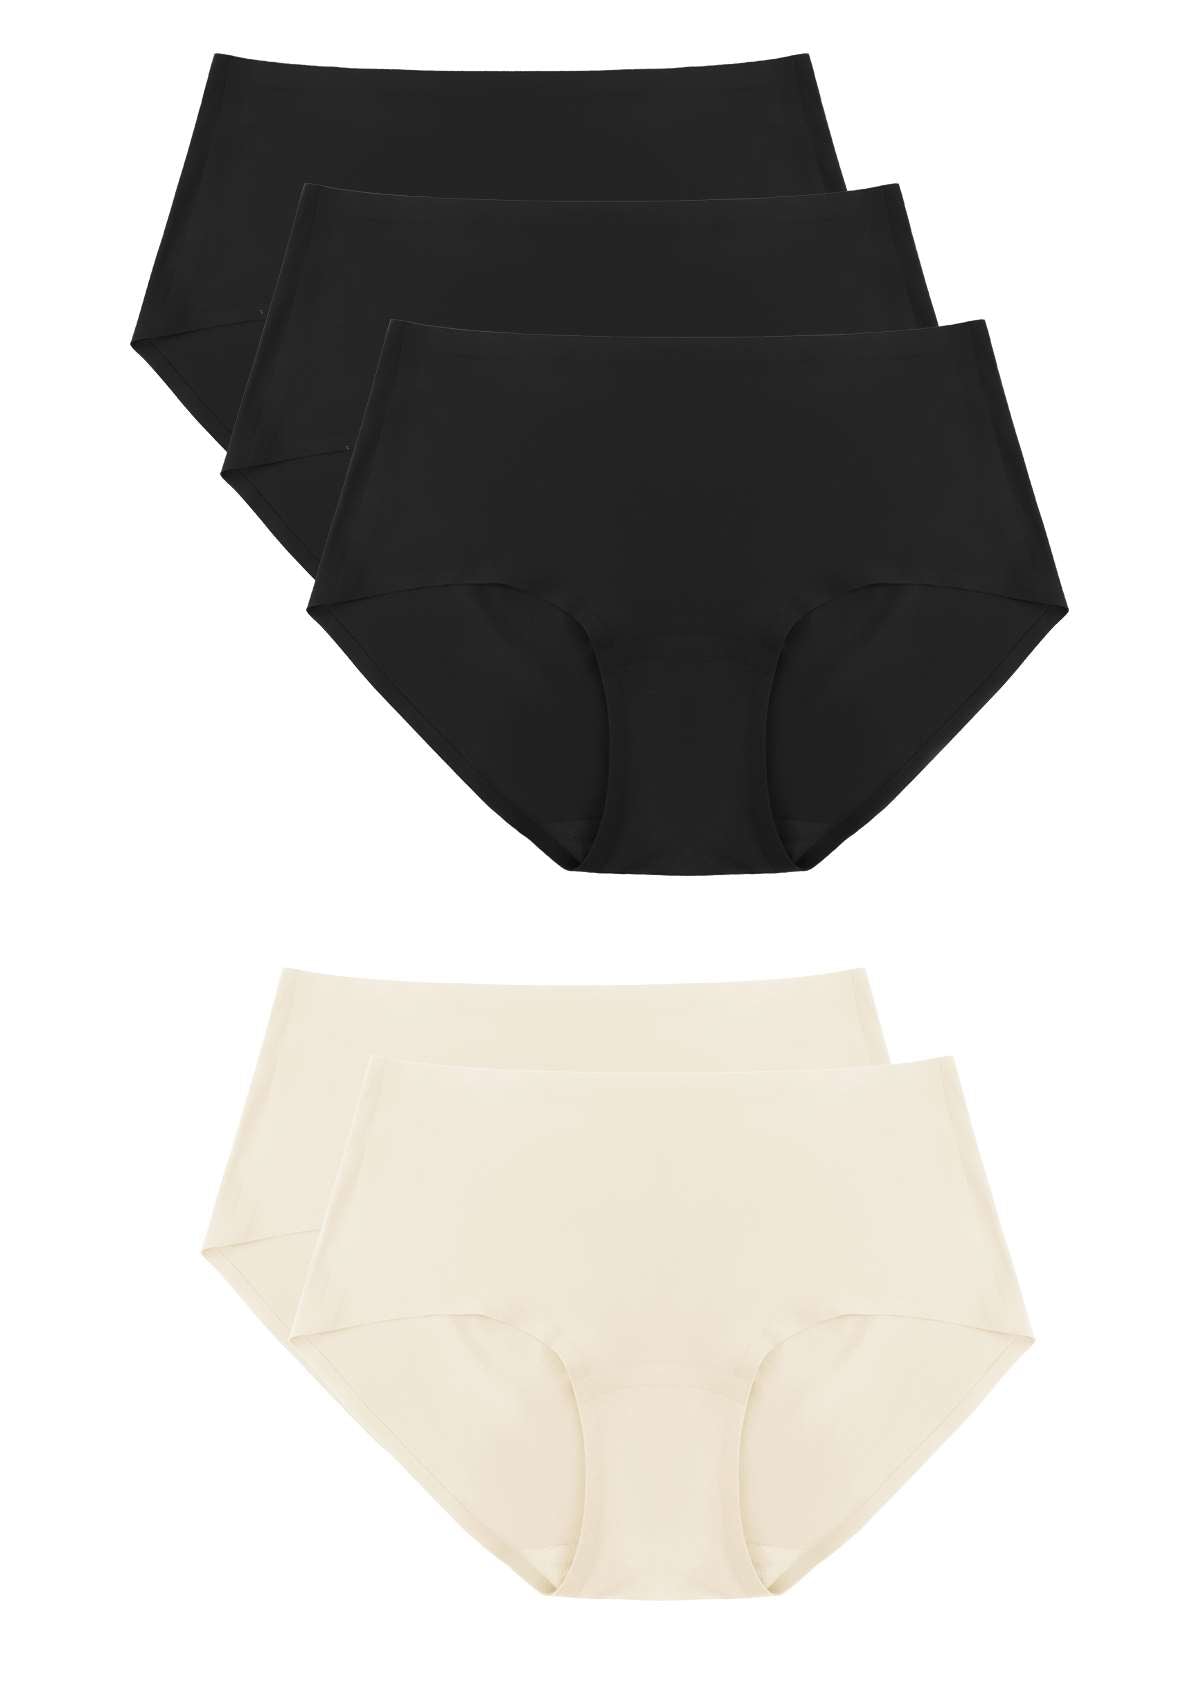 HSIA FlexiFit Soft Stretch Seamless Brief Underwear Bundle - 10 Packs/$35 / XS-L / 3*Black+2*Peach Beige